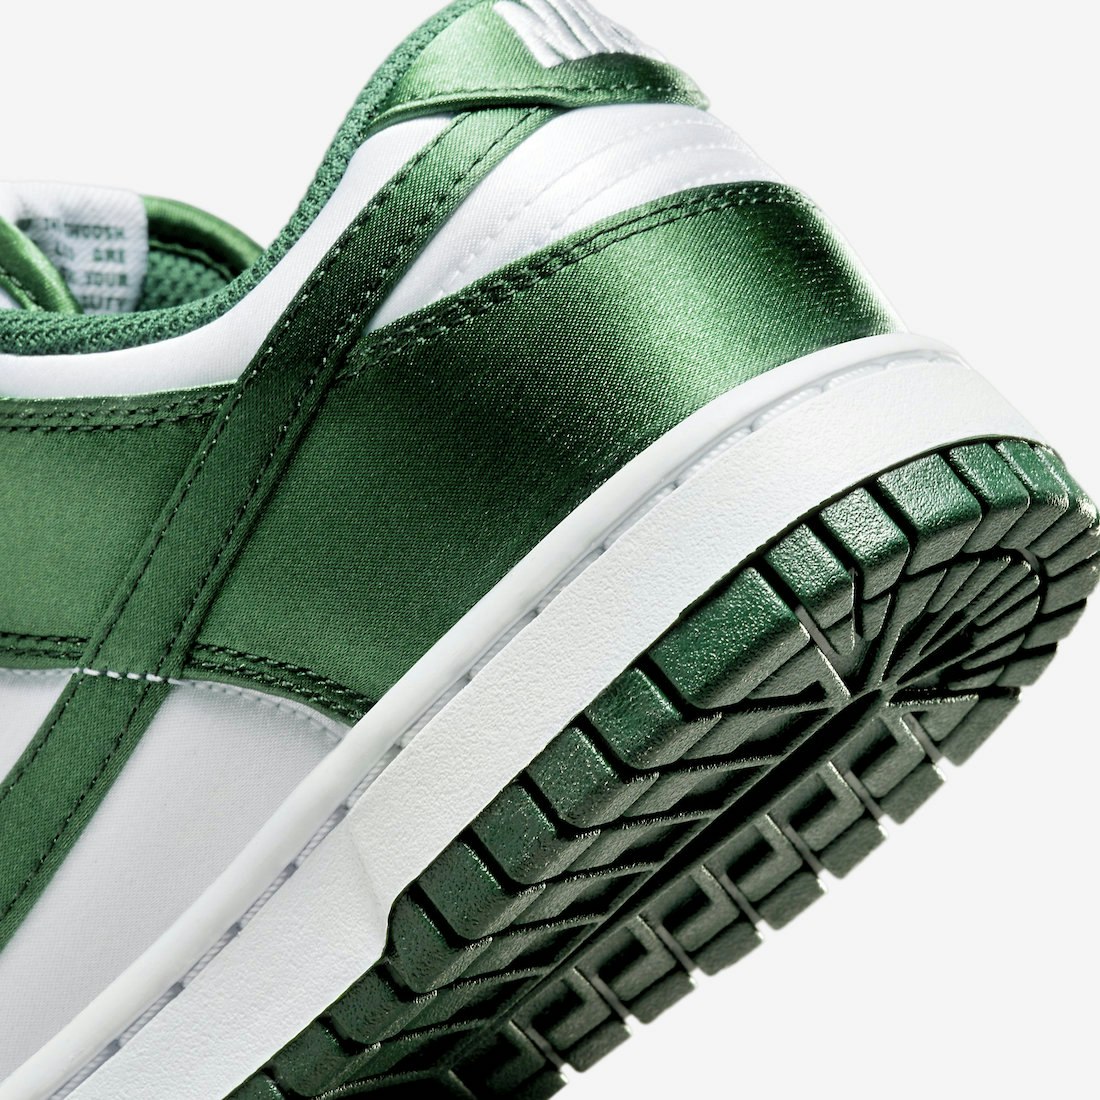 Nike Dunk Low "Satin Green"